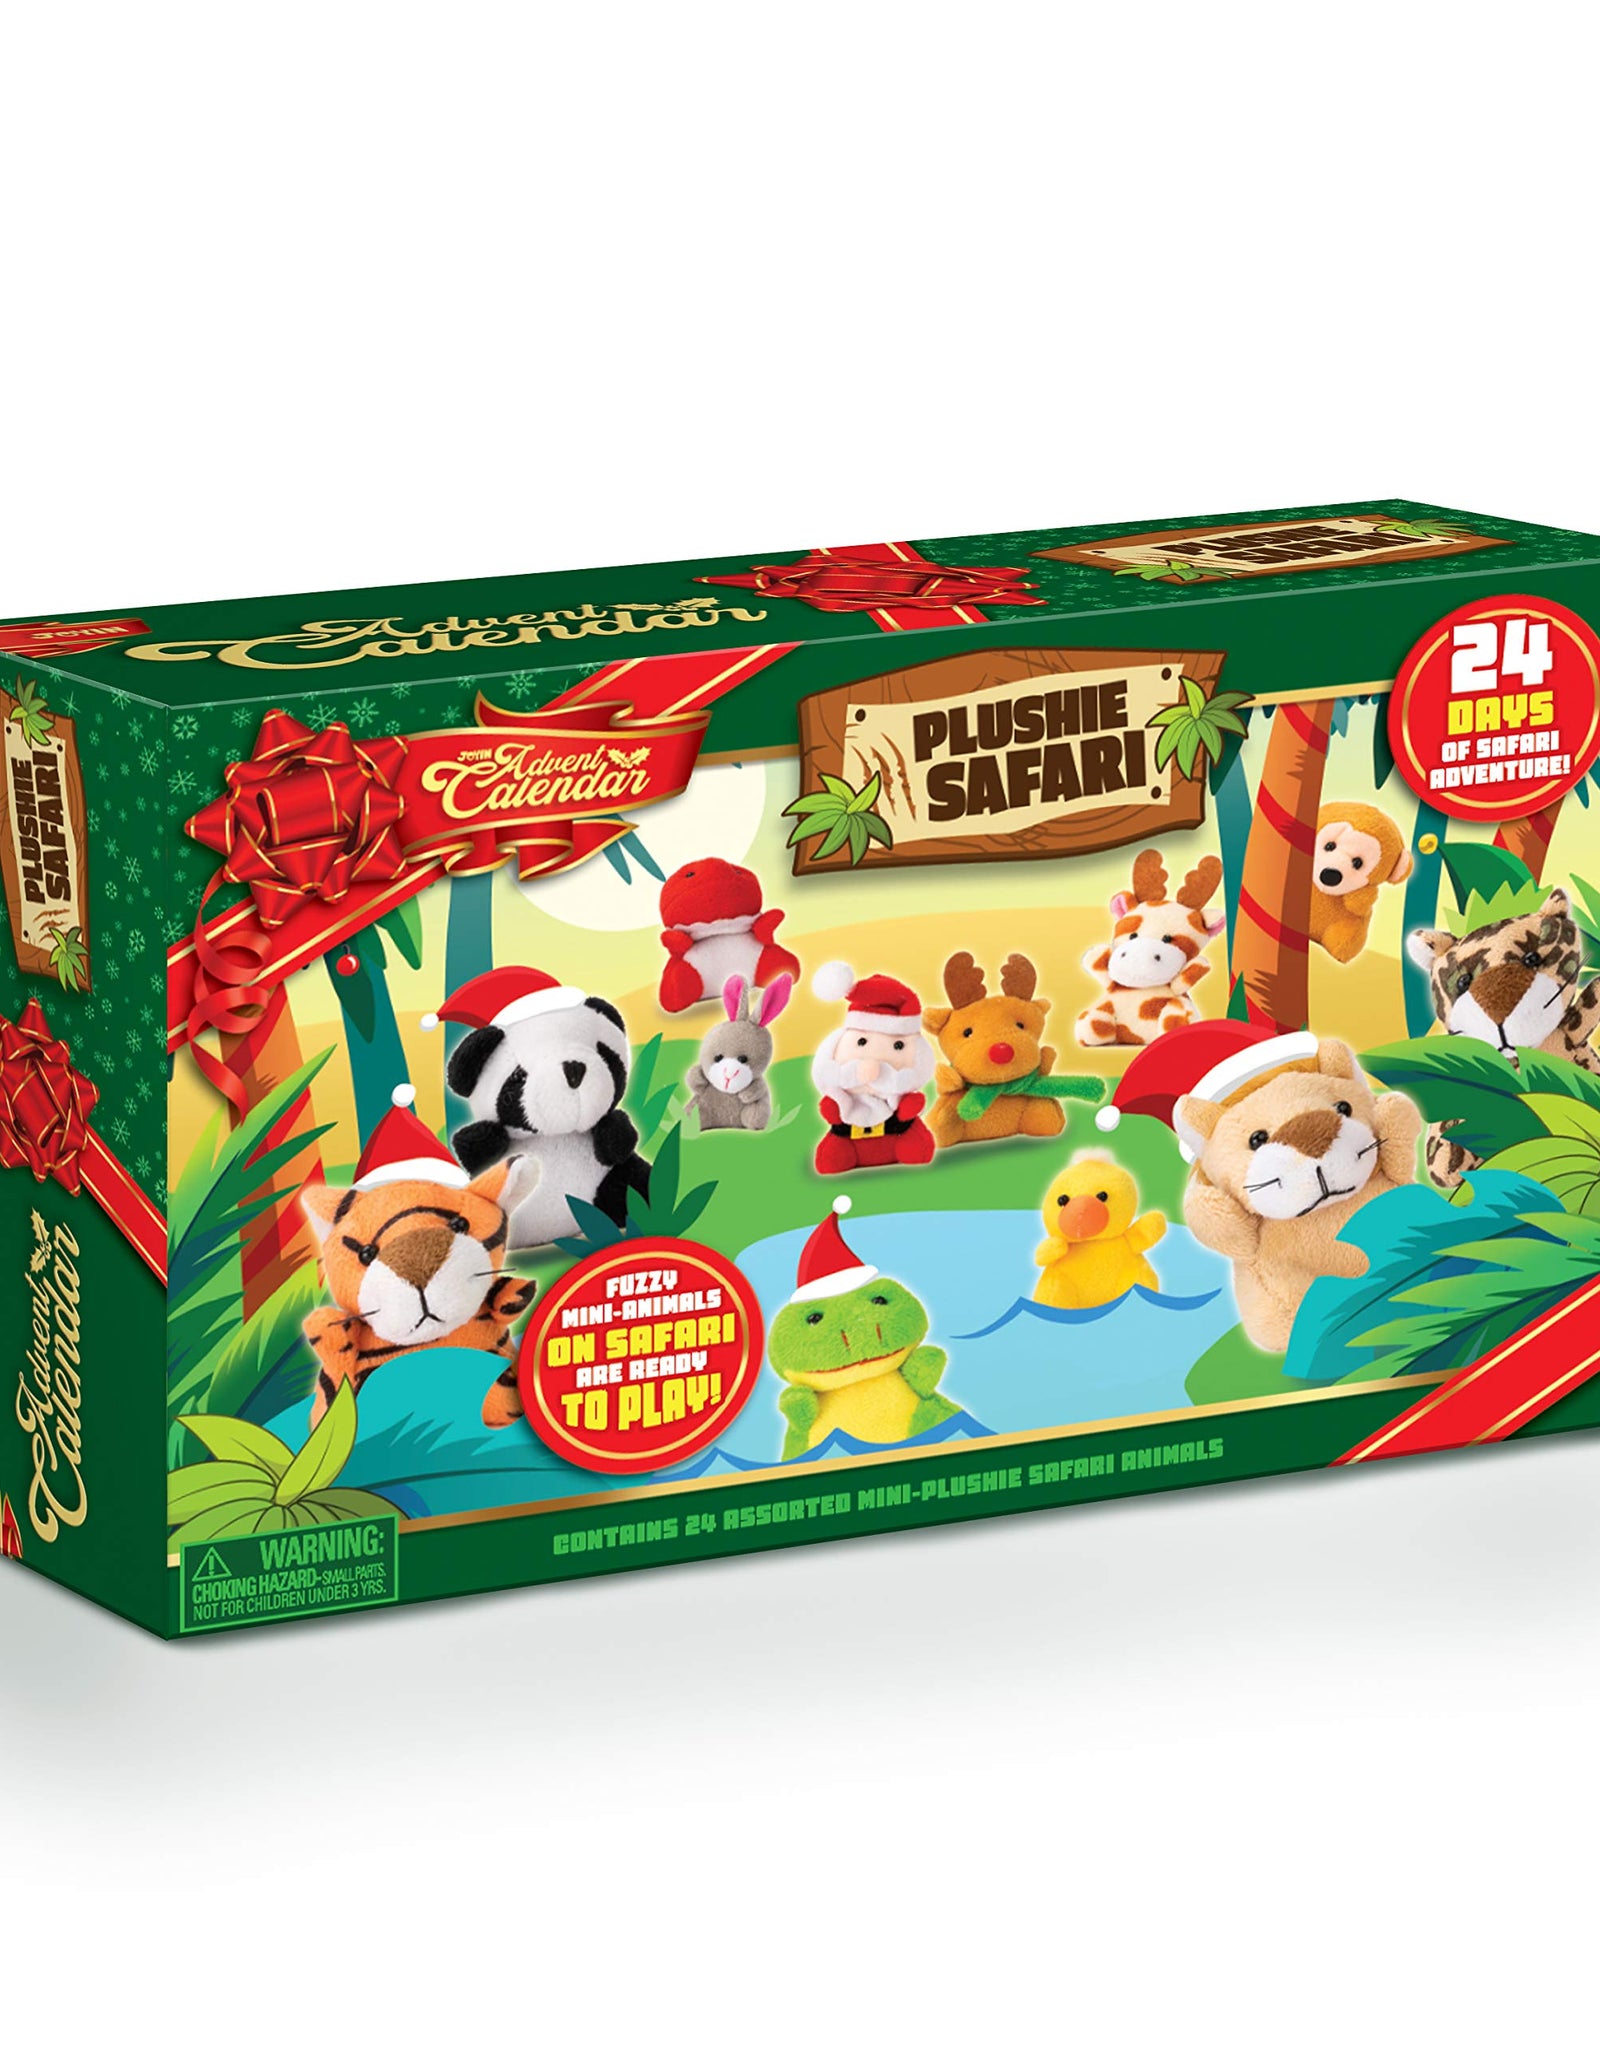 JOYIN 2021 Mini Animal Plush Advent Calendar Christmas 24 Days Countdown Advent Calendar with 24 Animal Plush Toys